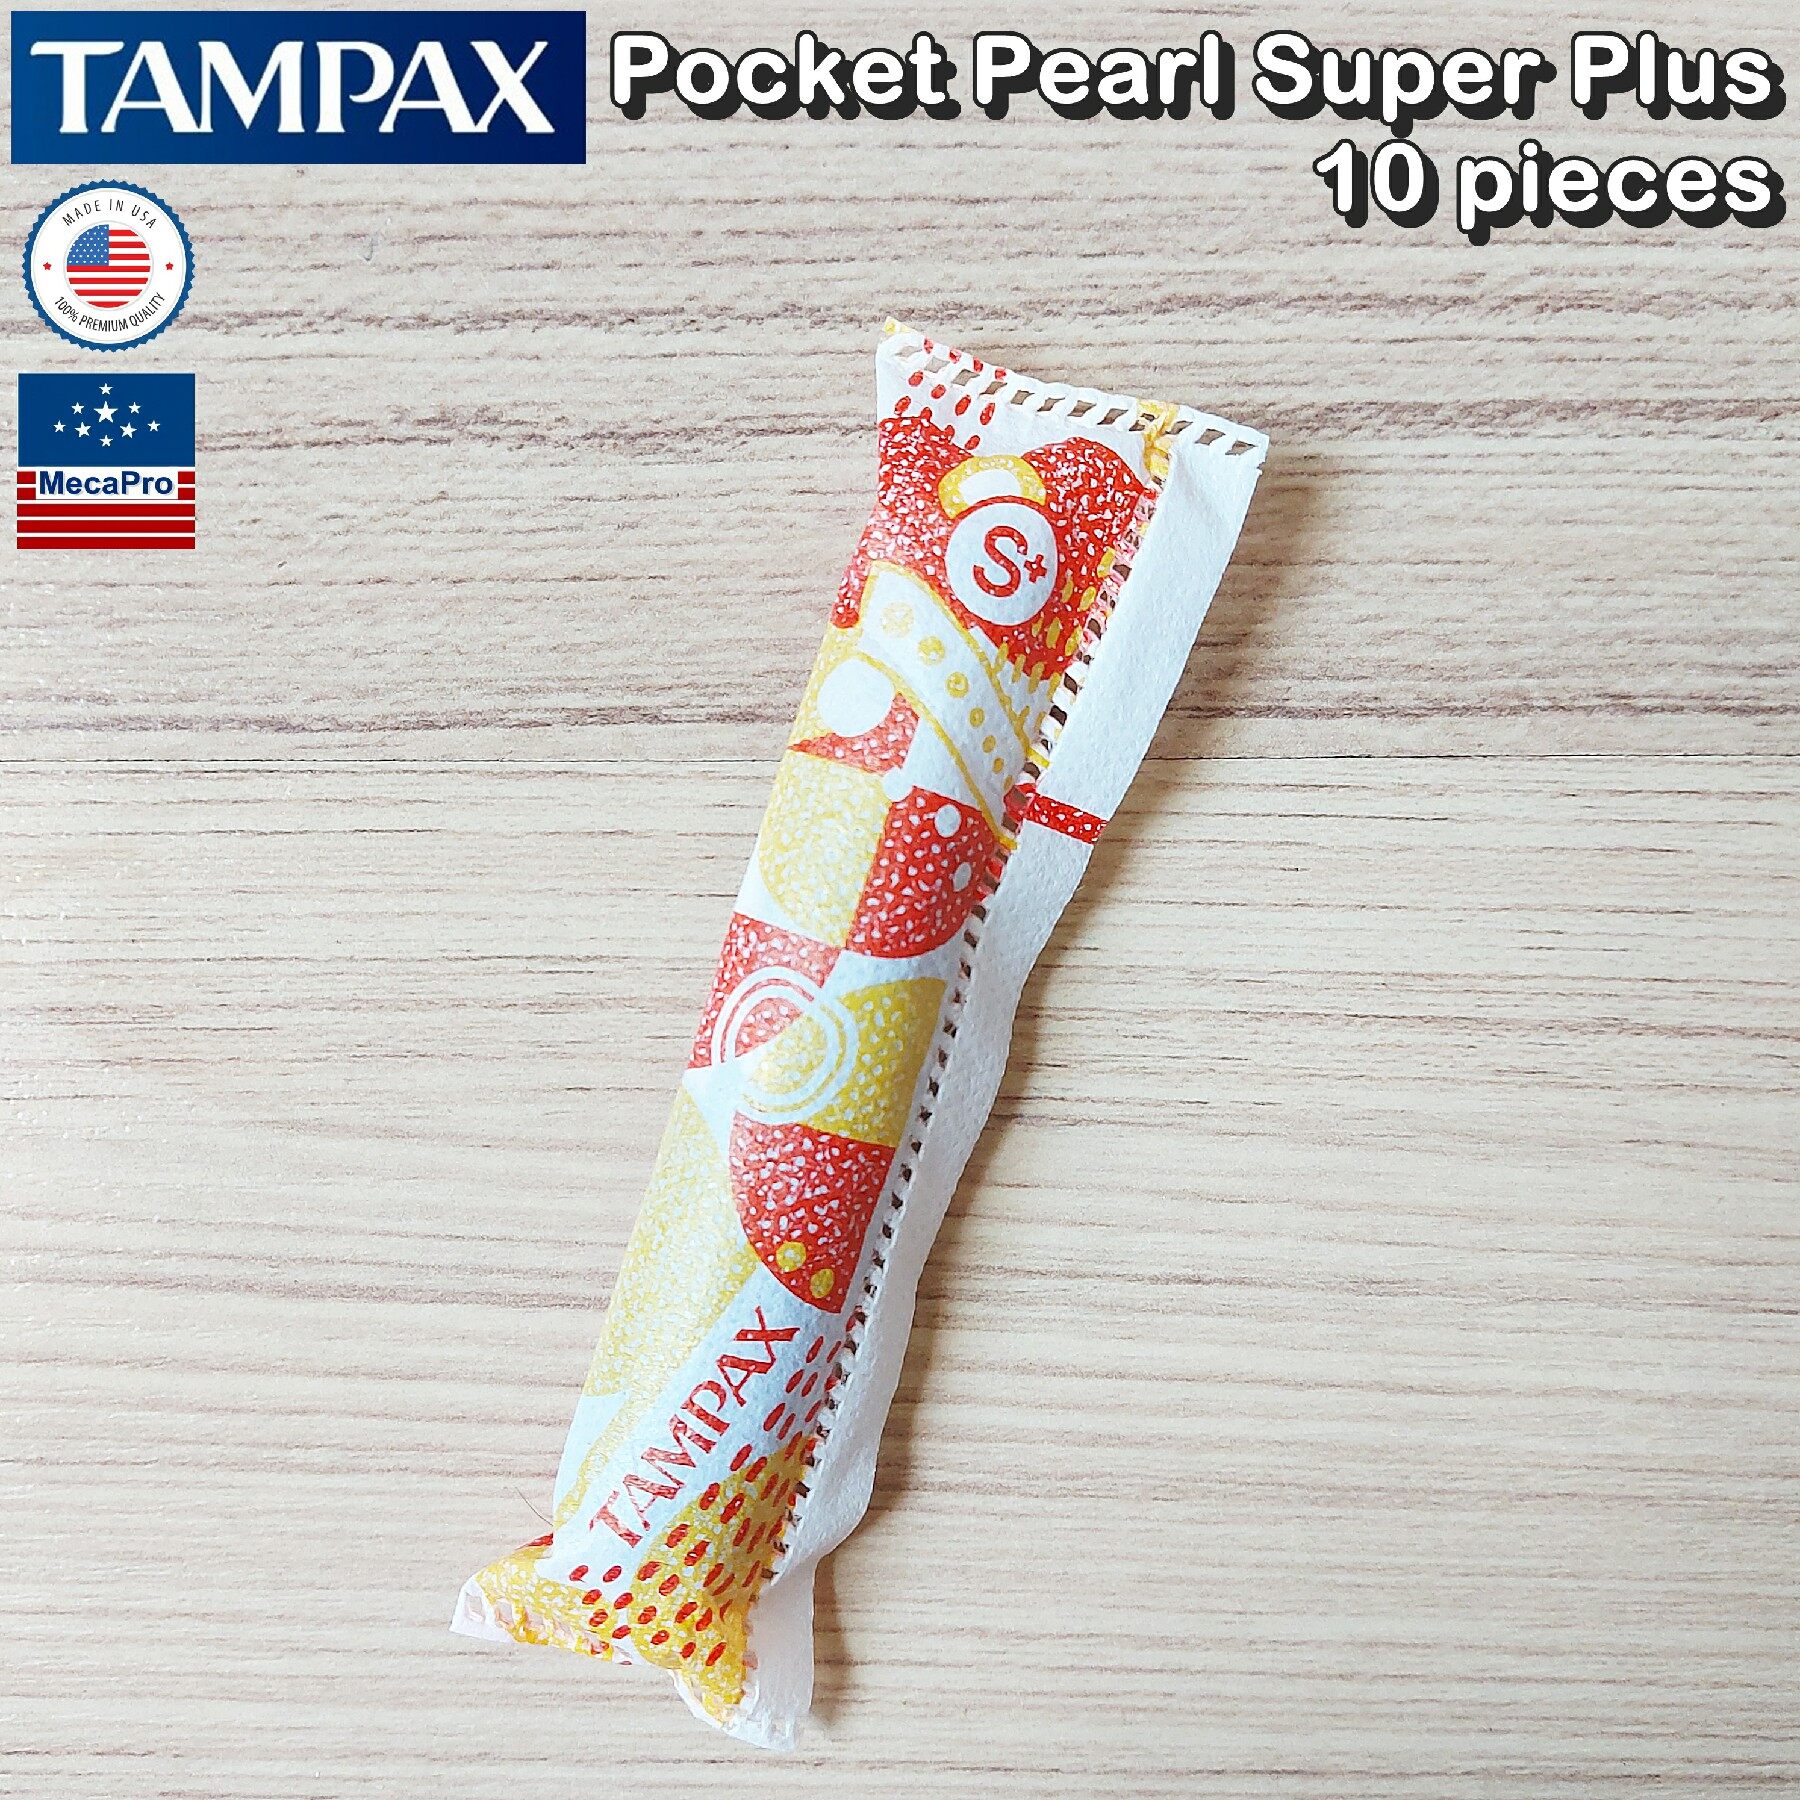 Tampax® Pocket Pearl Plastic Tampons Super Plus 10 pieces ผ้าอนามัยแบบสอด 10 ชิ้น เหมาะกับวันมามาก